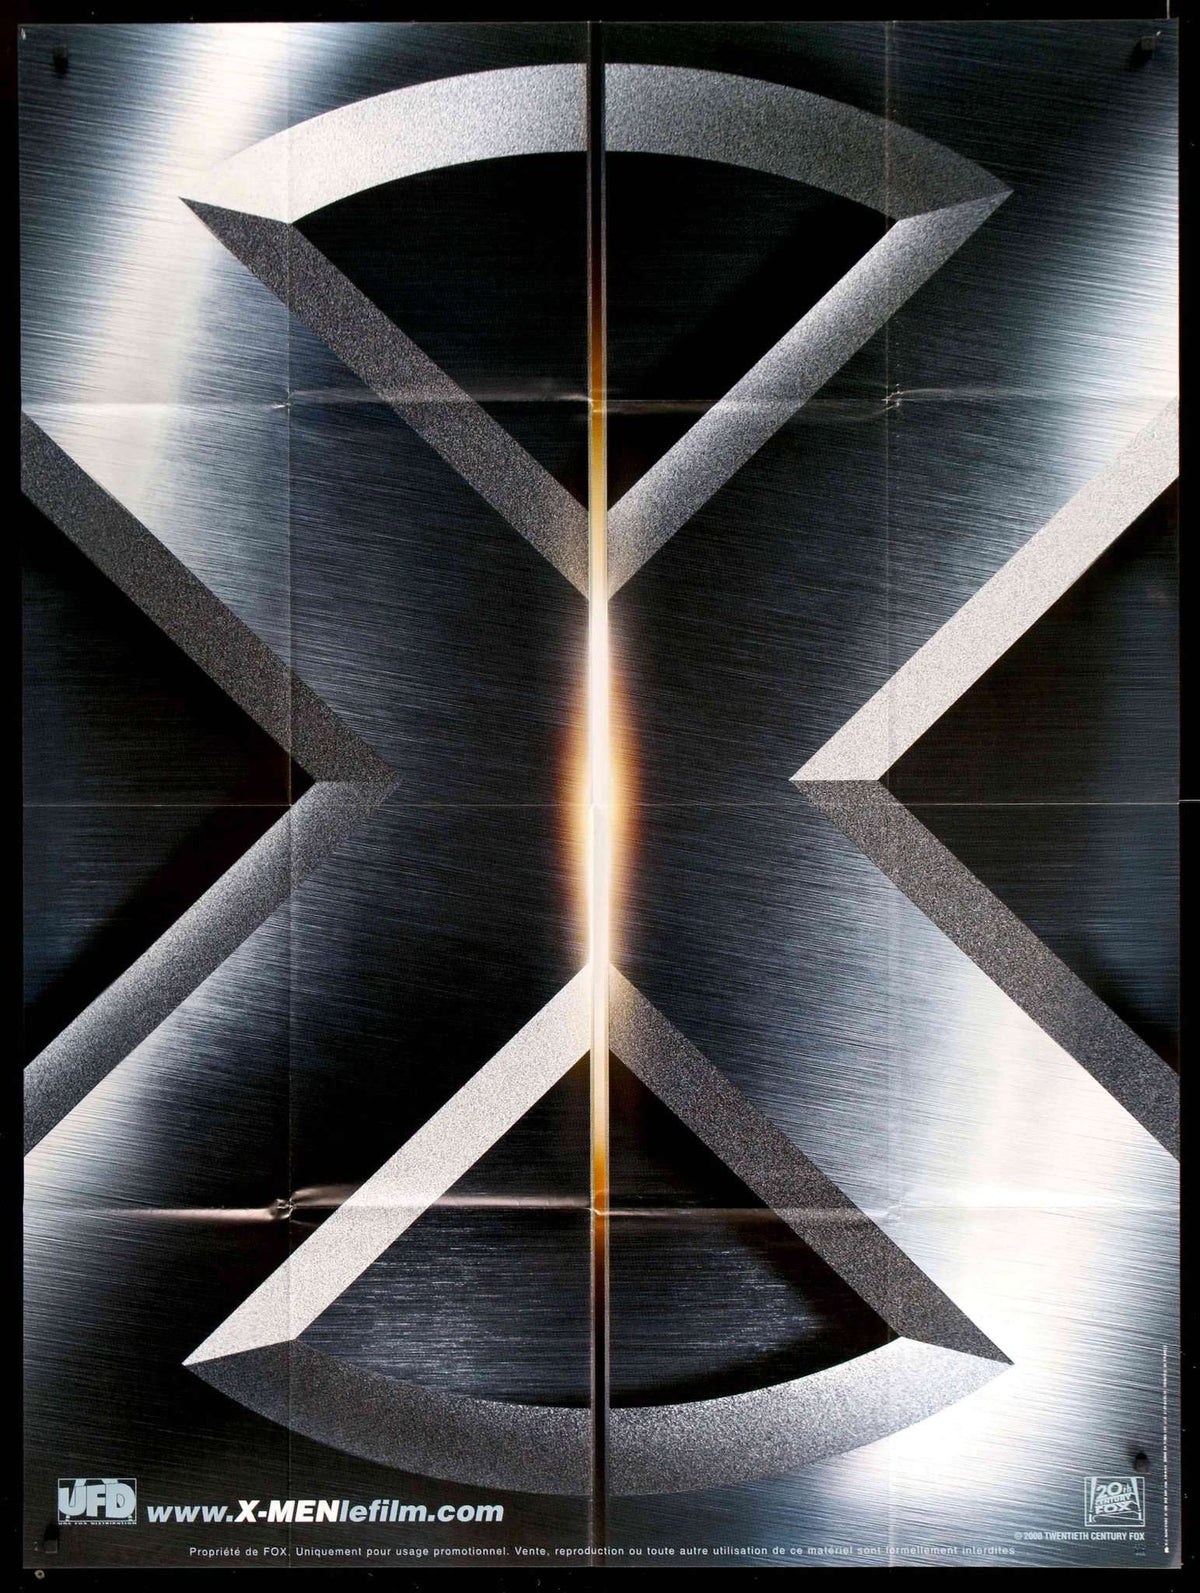 X-Men (2000) original movie poster for sale at Original Film Art